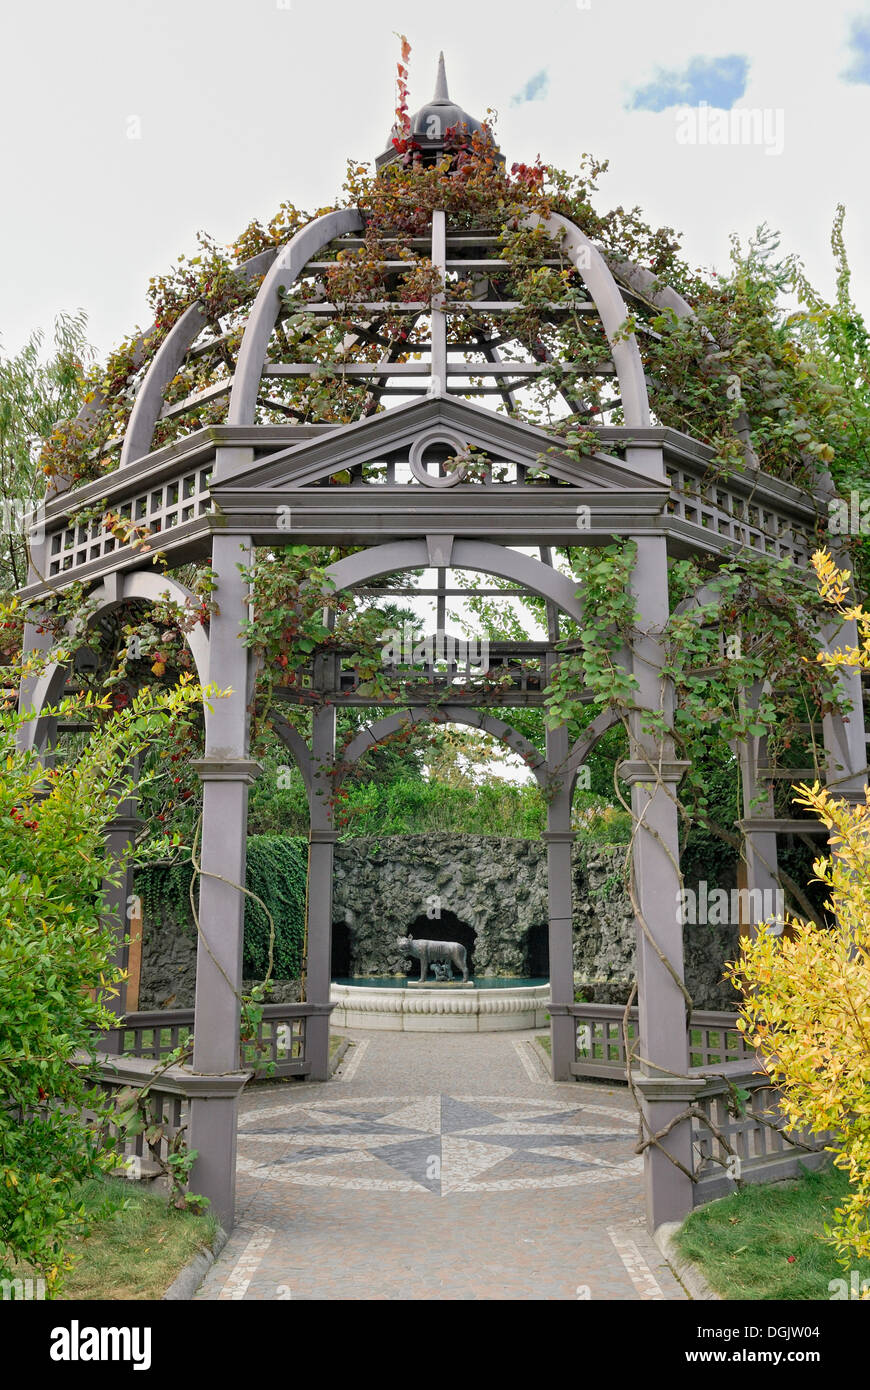 Gazebo, steel structure, Italian Renaissance Garden, Hamilton Gardens, Hamilton, North Island, New Zealand Stock Photo